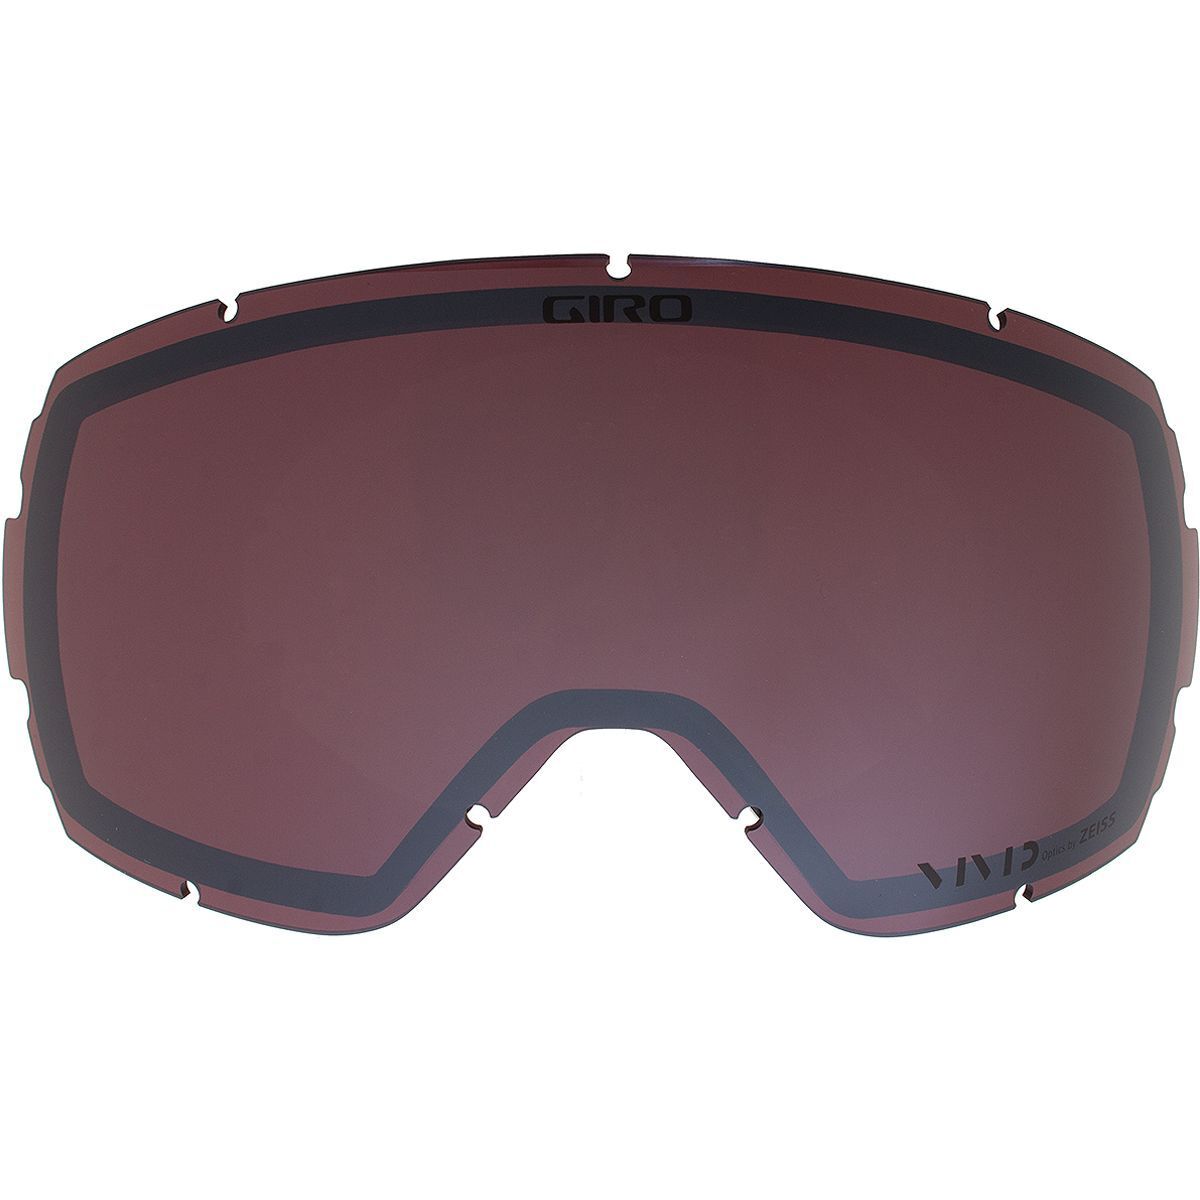 Giro Balance/Facet Goggles Replacement Lens